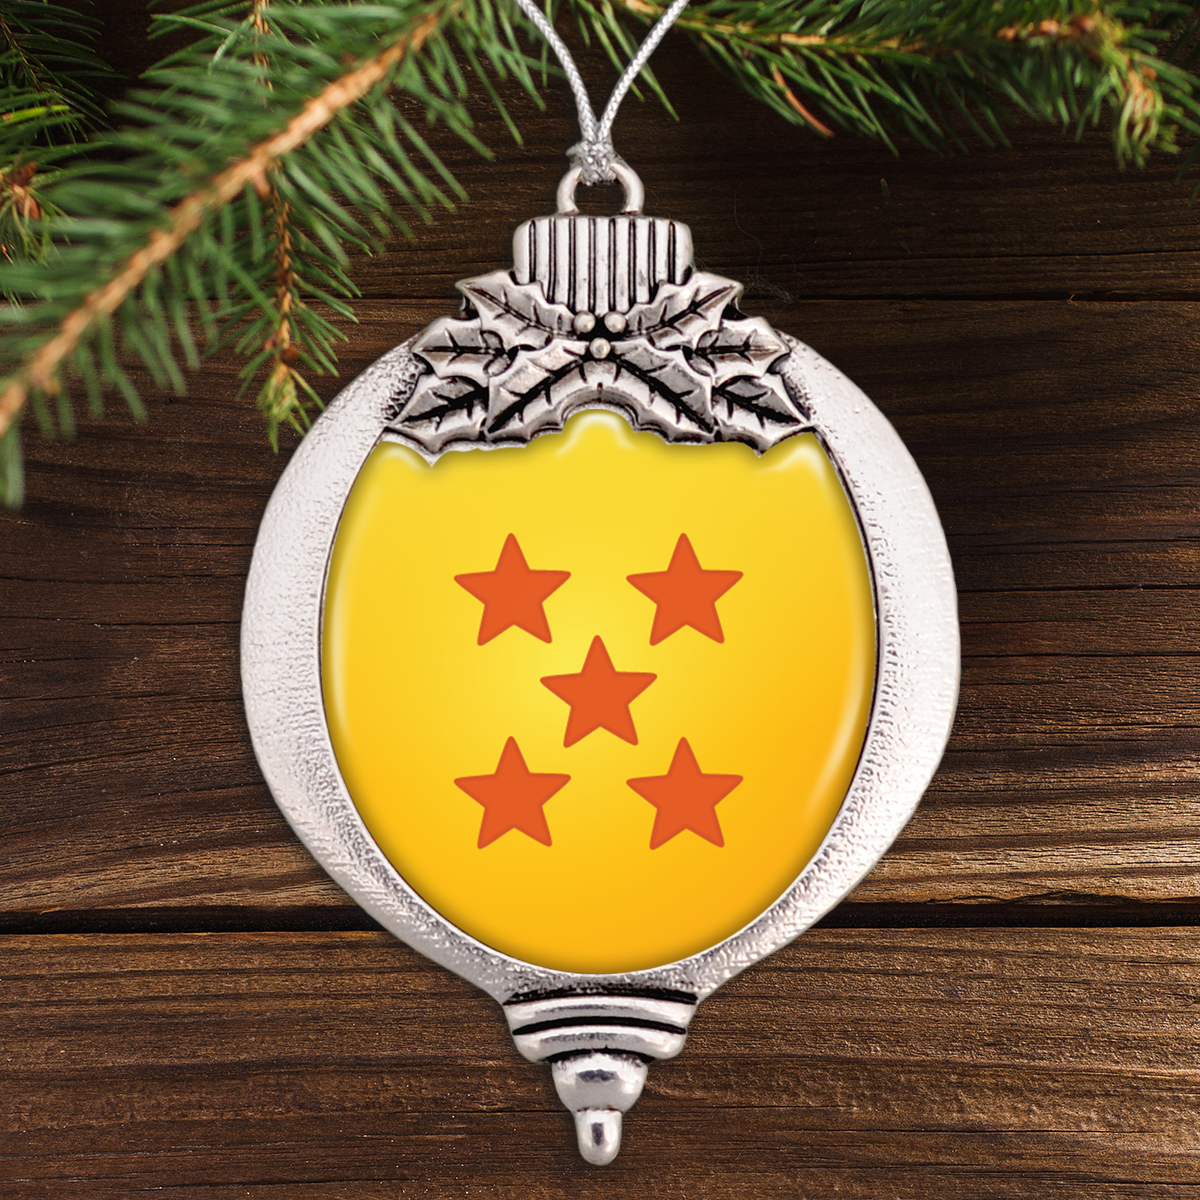 Dragon Ball 5 Star Bulb Ornament